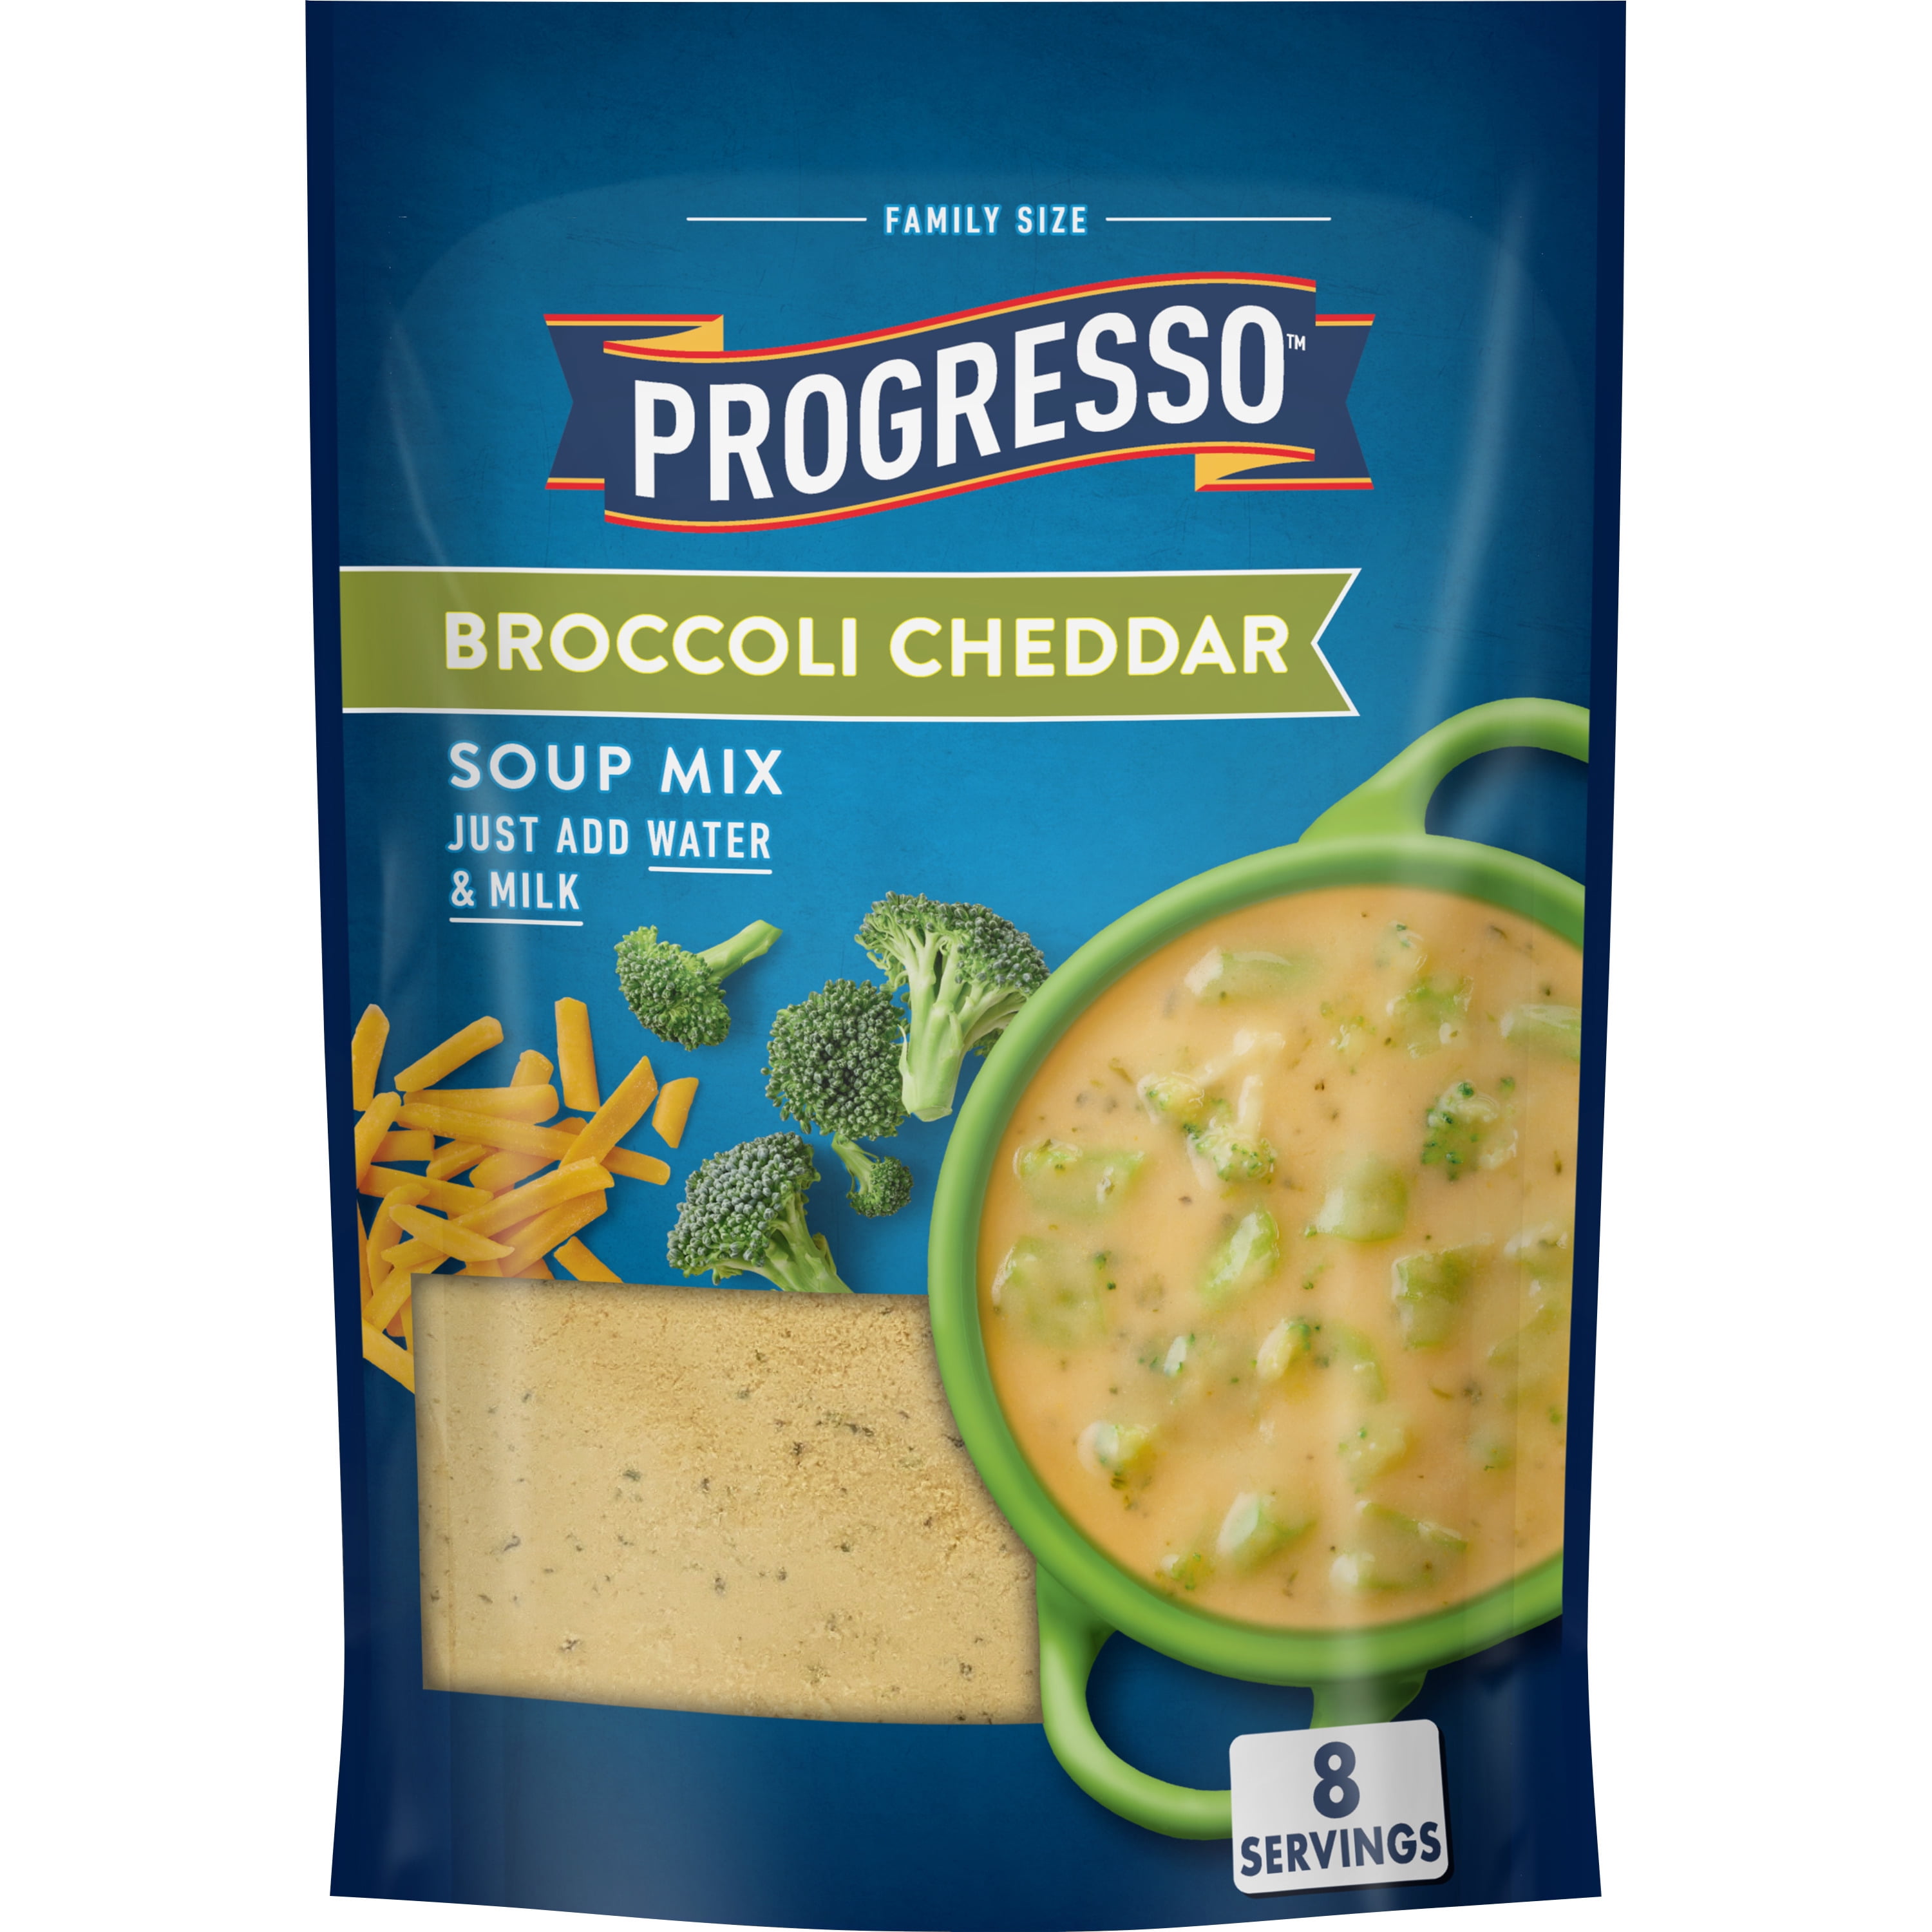 Progresso Broccoli Cheddar Soup Mix, Family Size, 8 servings, 8 oz ...